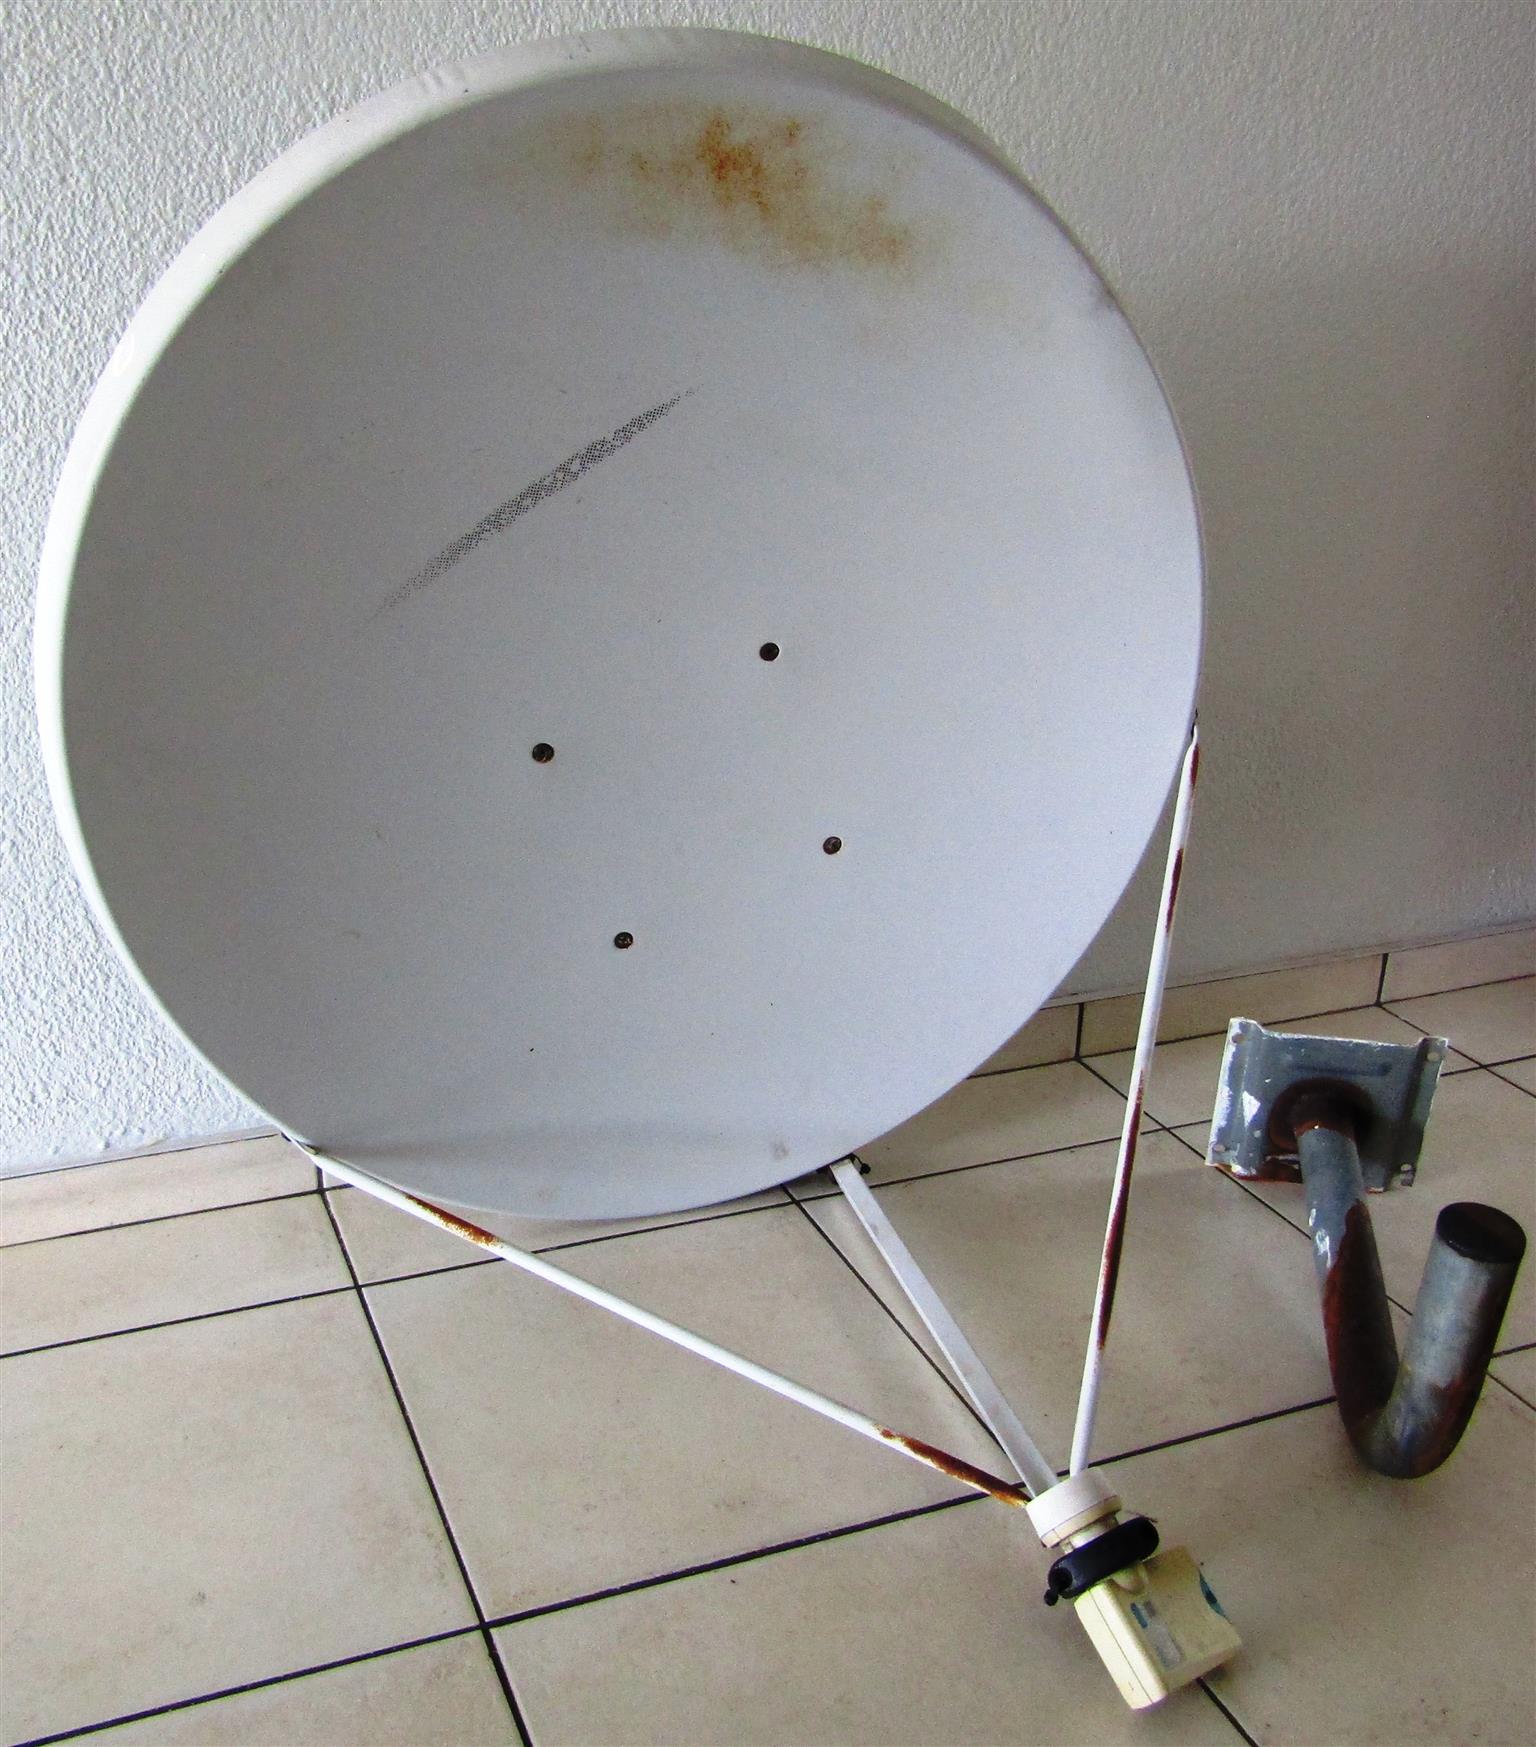 91cm Satellite Dish with Mounting Bracket - used